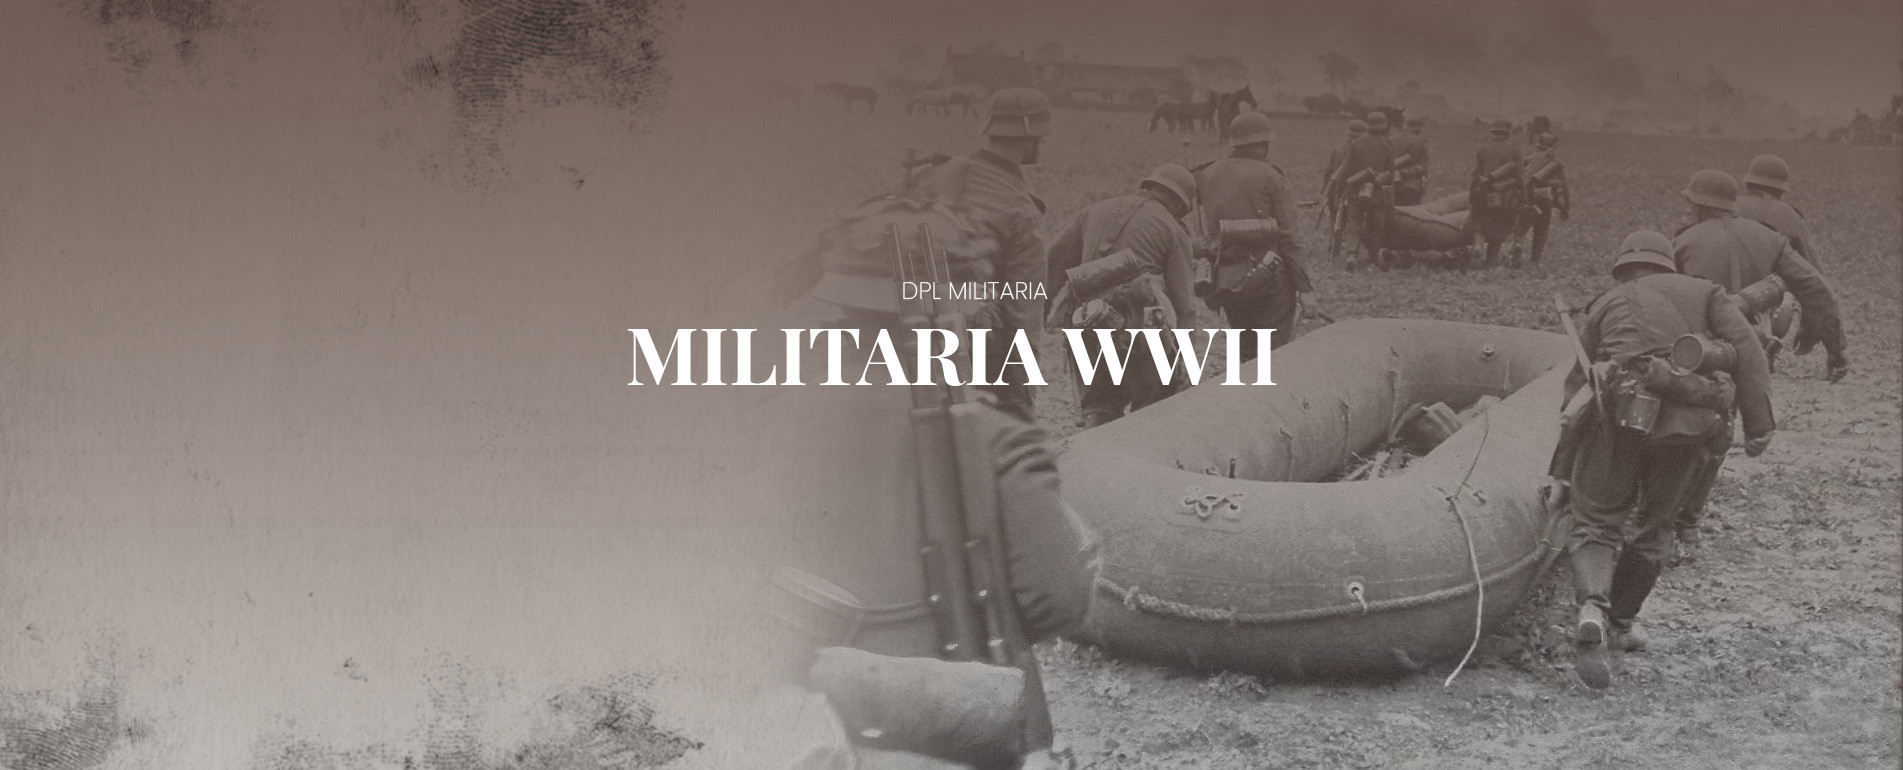 MILITARIA WWII